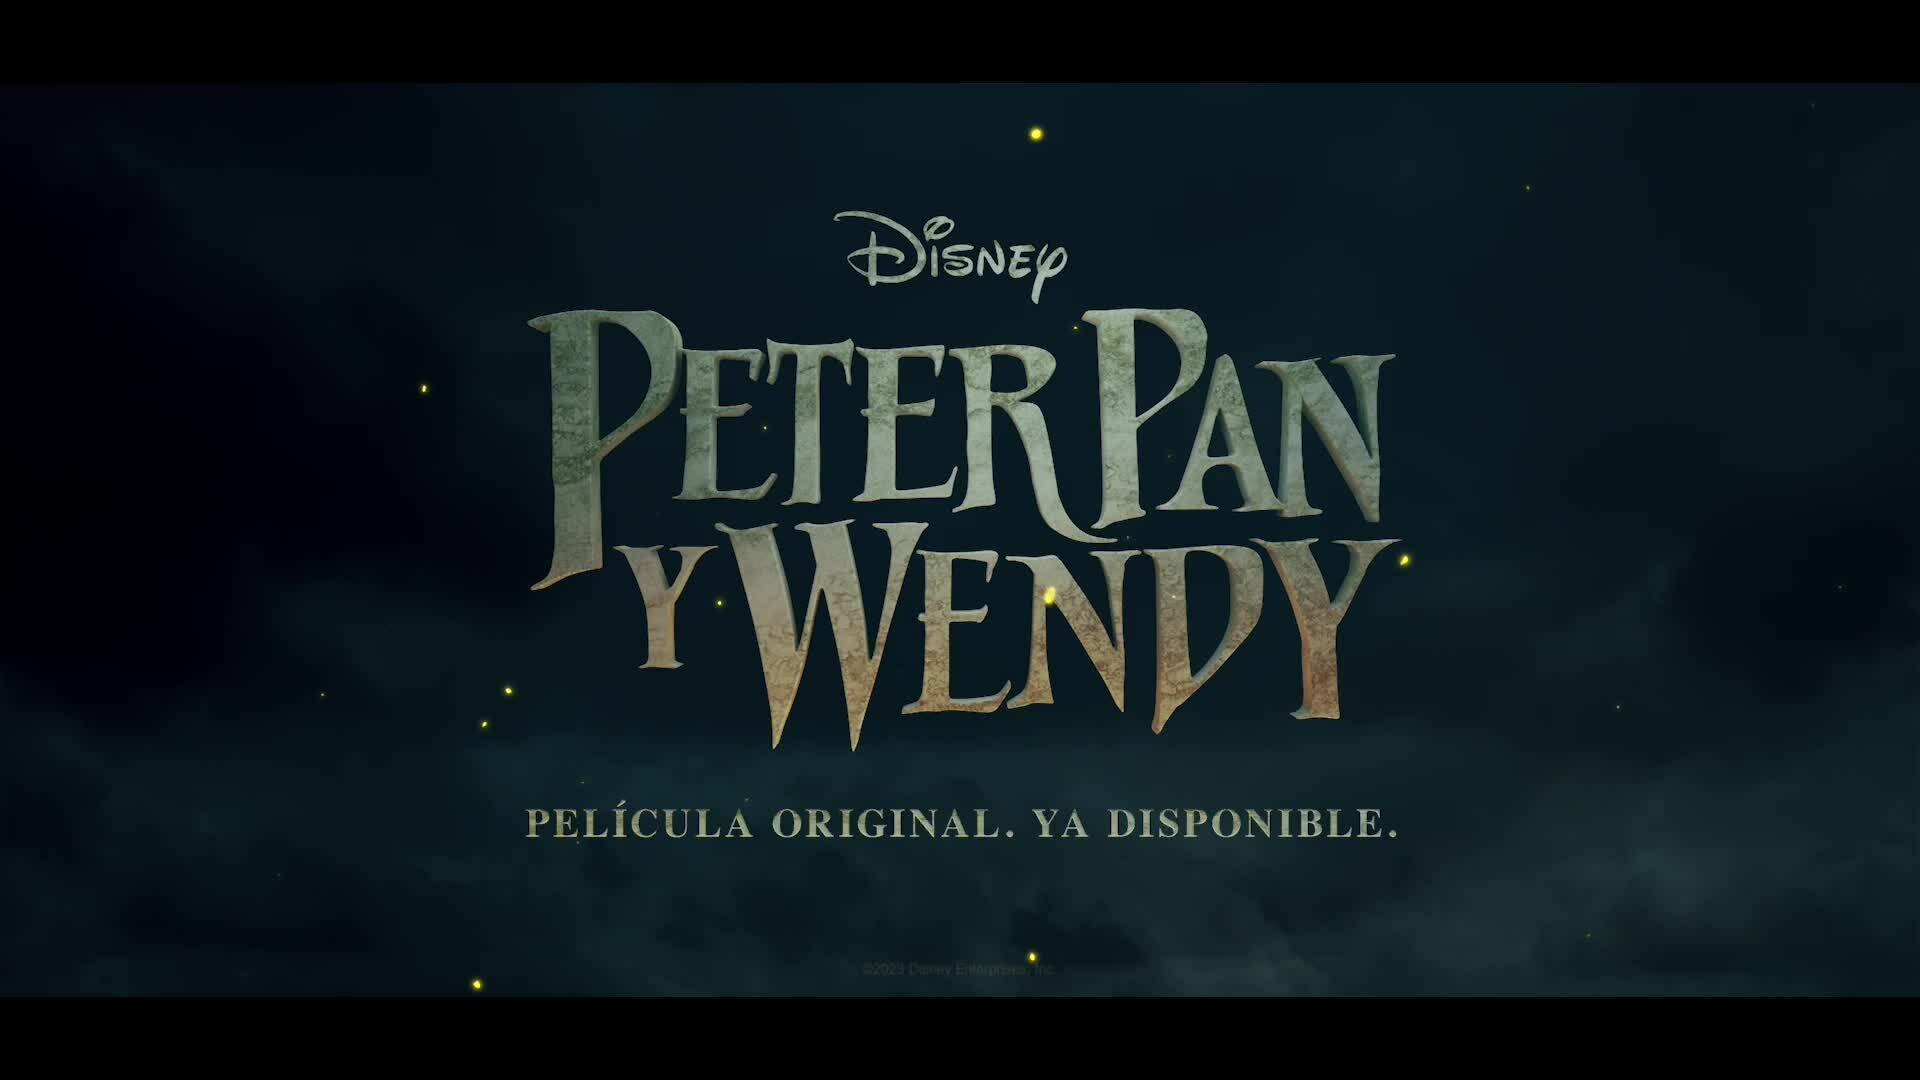 'Peter Pan y Wendy' | Featurette |Reimagining Neverland